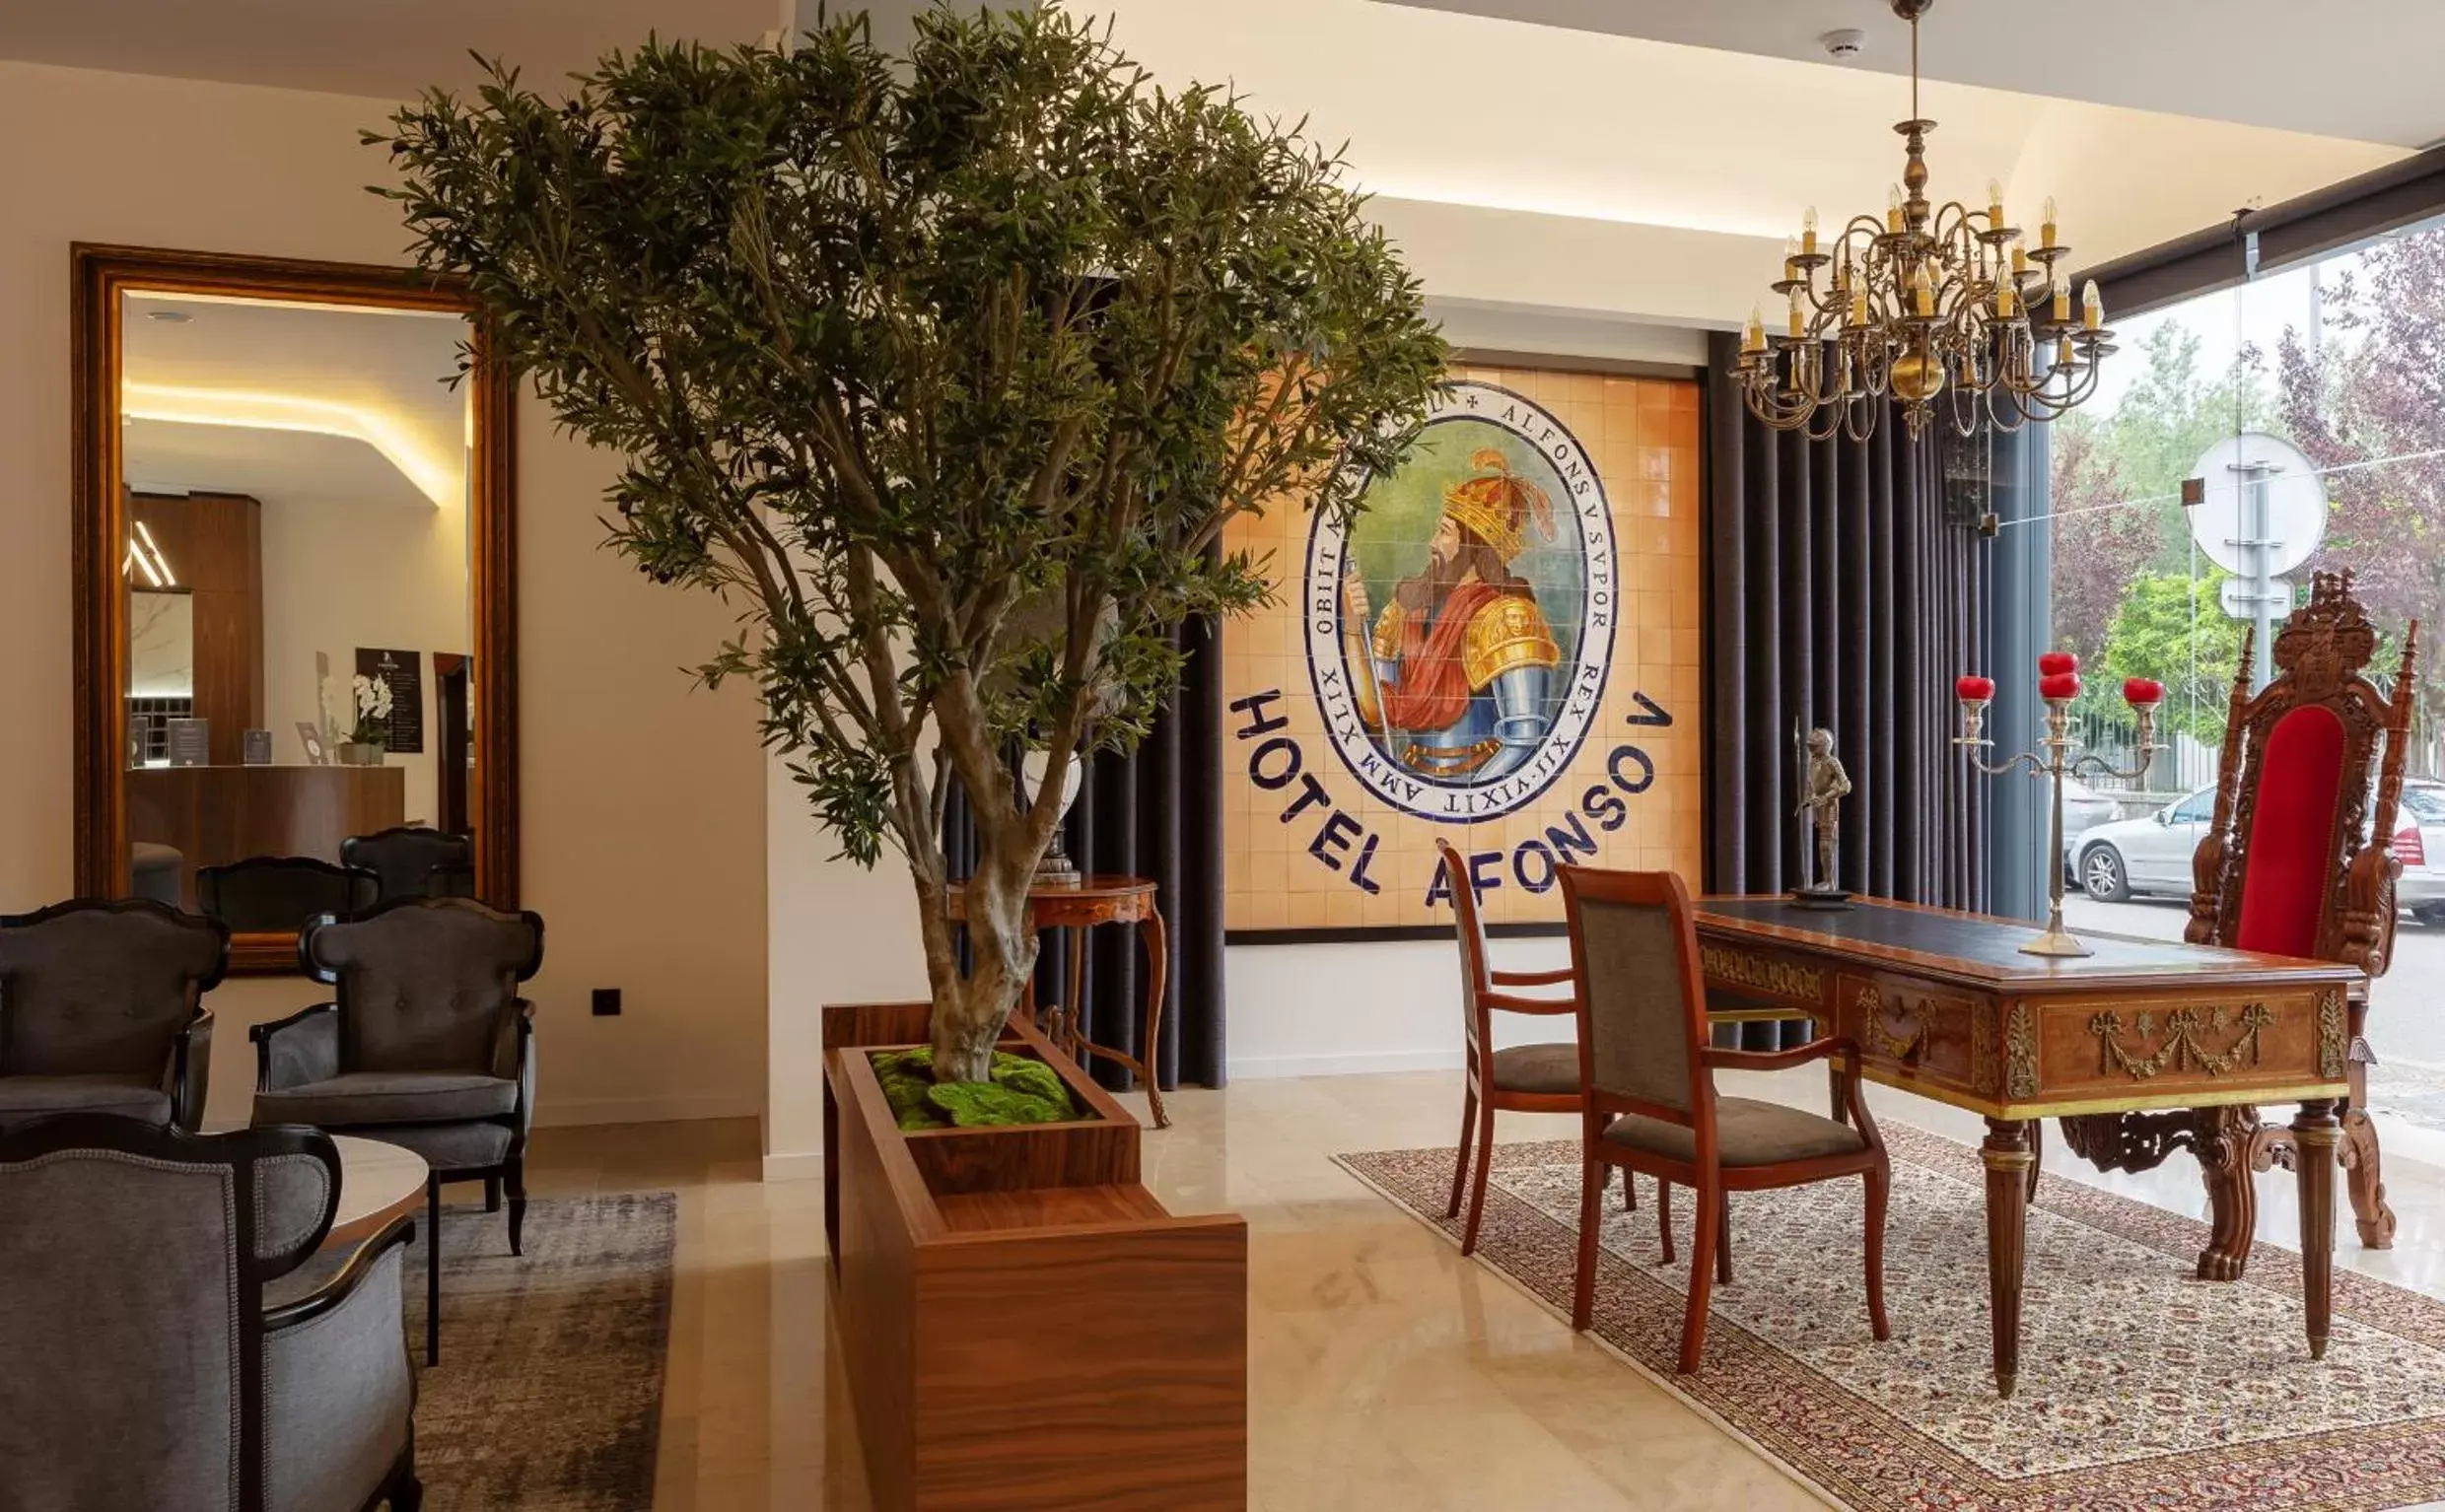 Lobby or reception in Hotel Afonso V